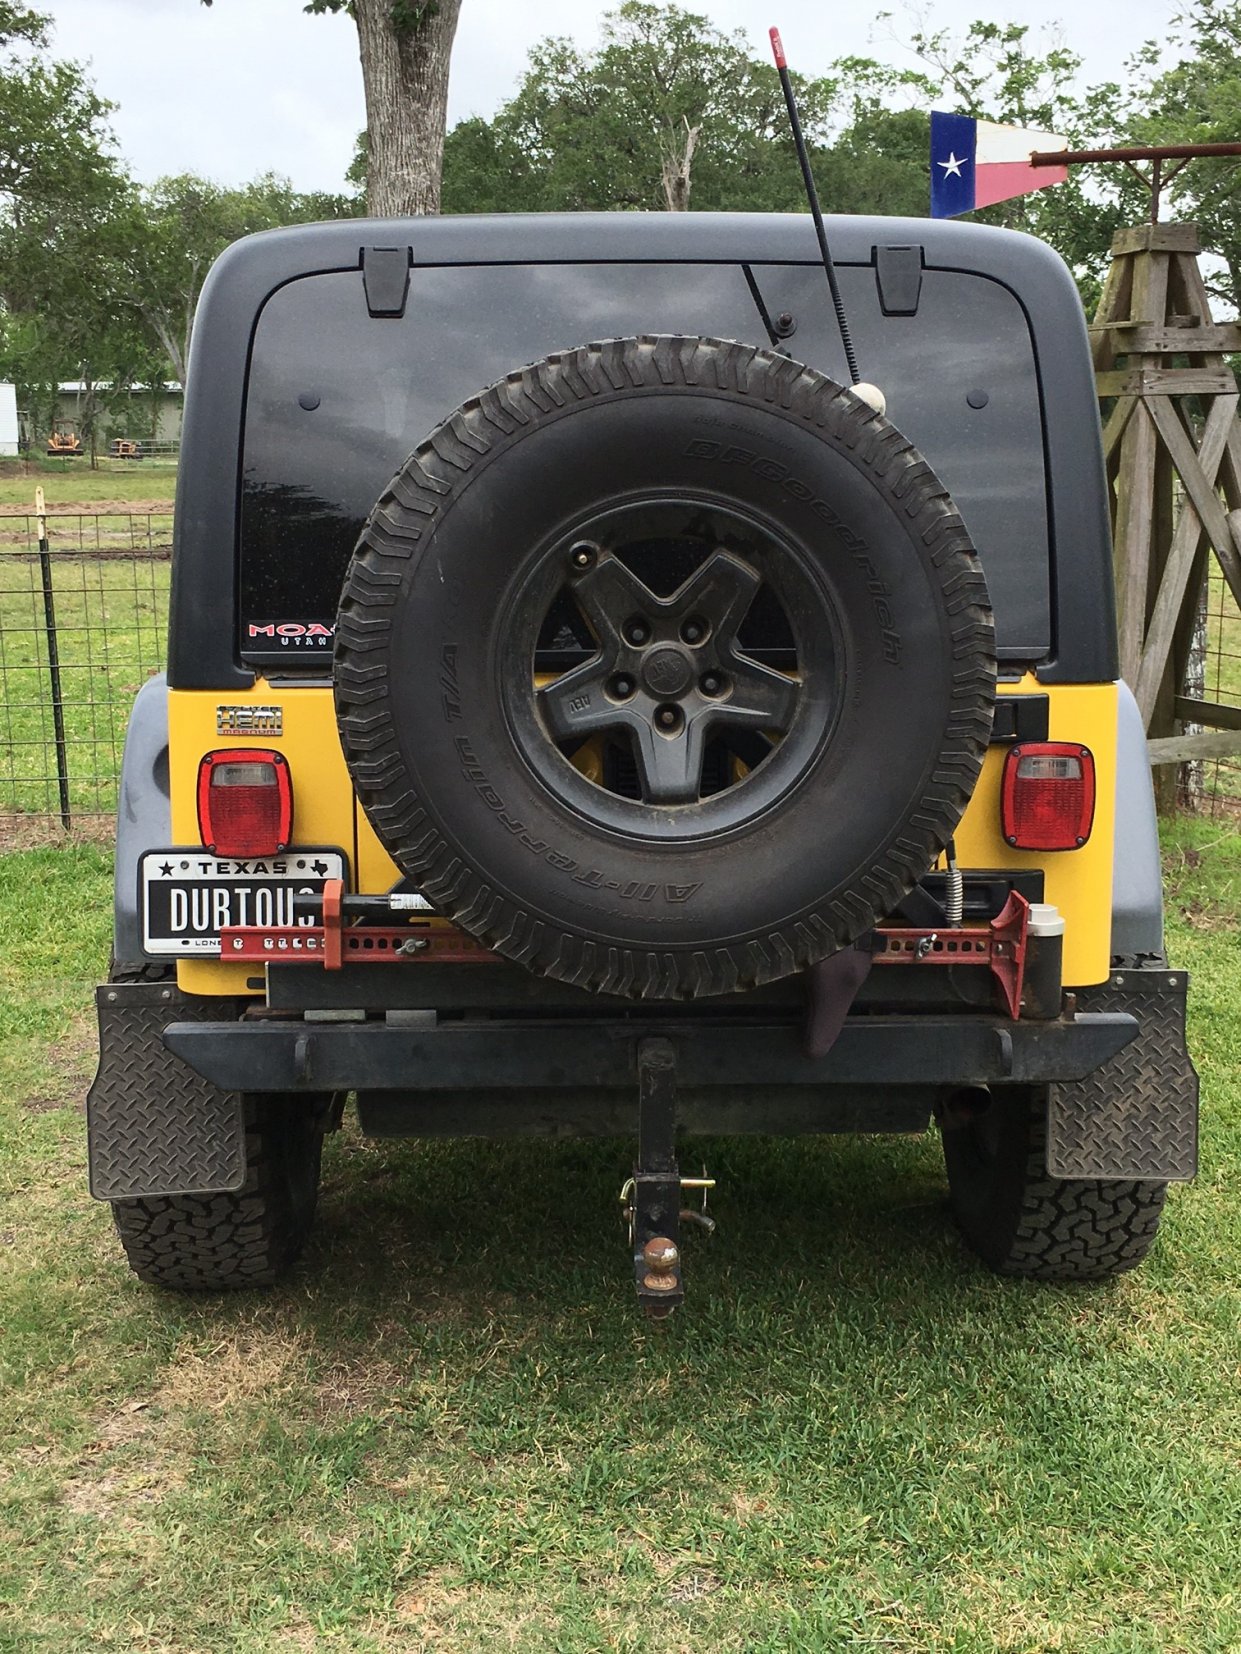 2006 Jeep Rubicon Unlimited - AEV HEMI V8 engine conversion - Houston, TX |  Expedition Portal